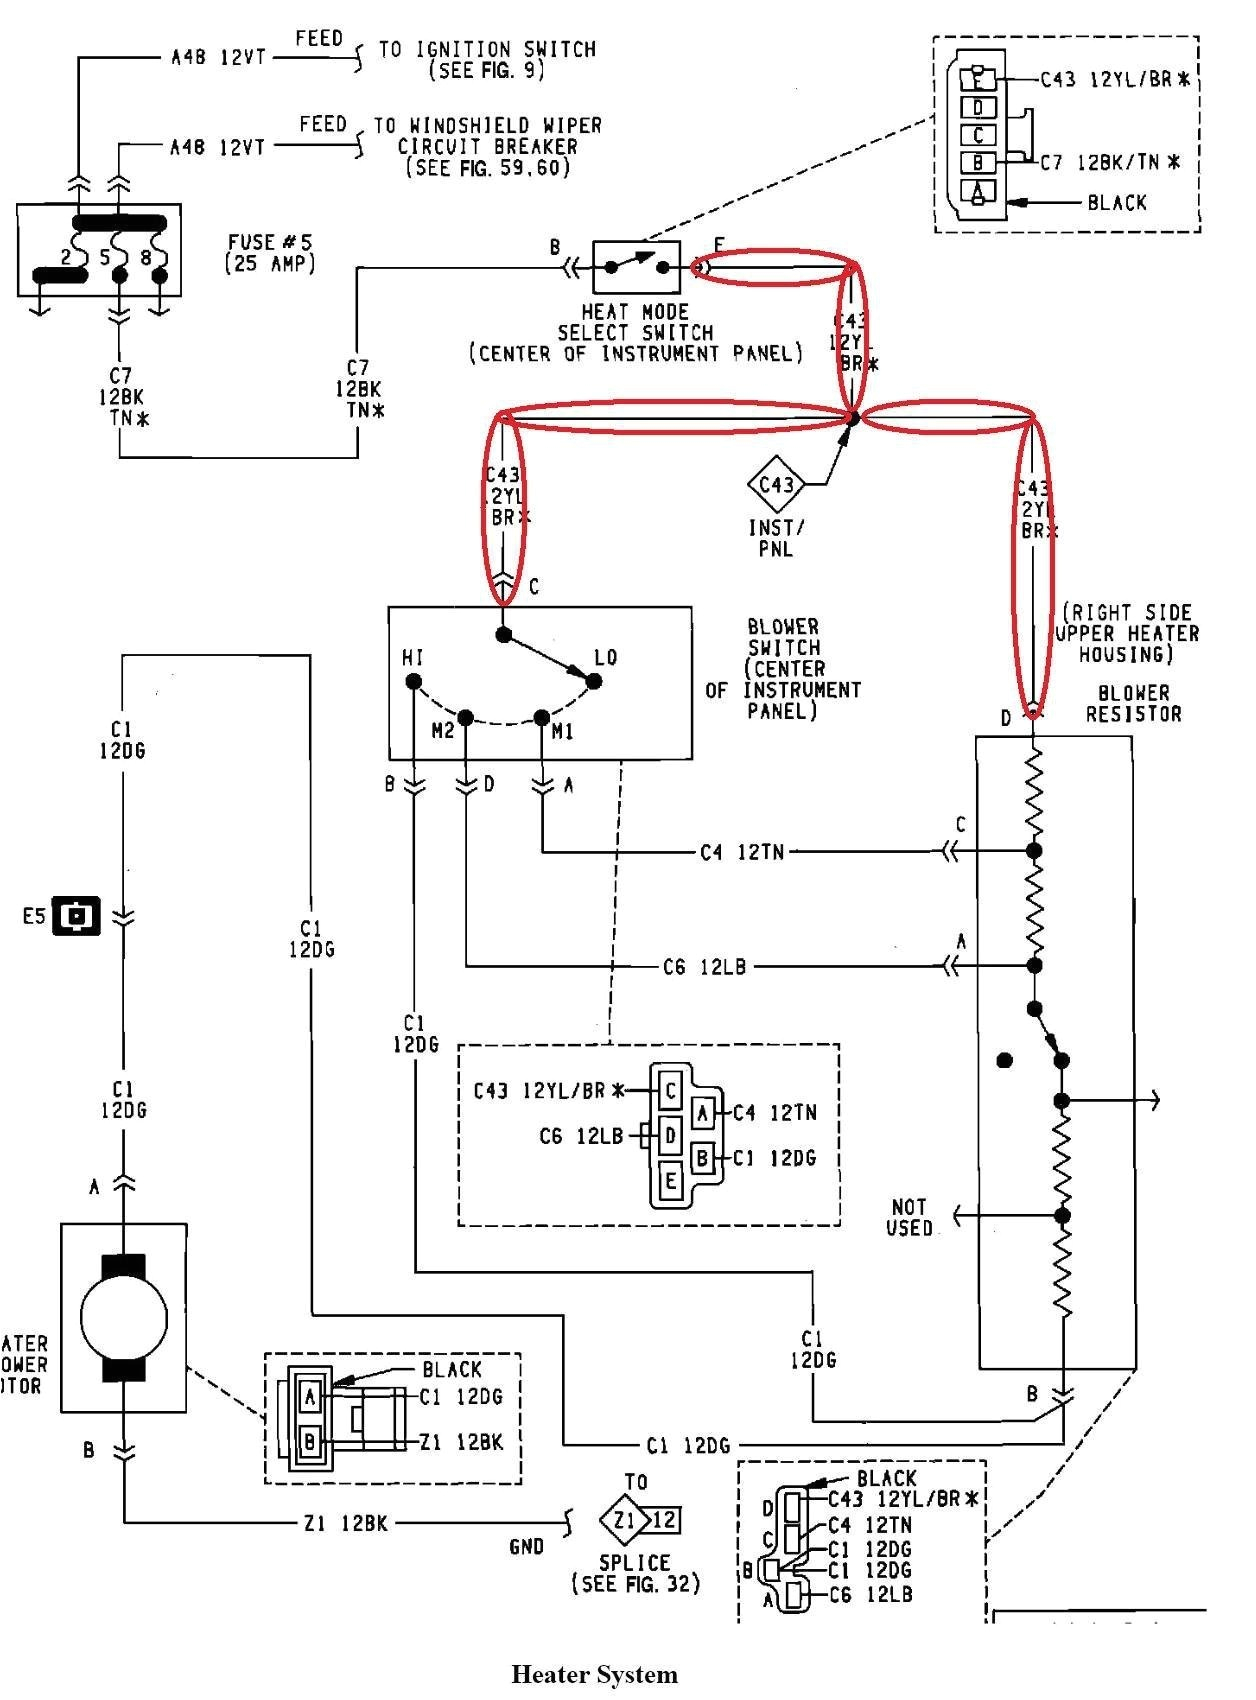 98 ezgo wiring diagram wiring diagram review 1998 ezgo wiring diagram wiring diagram 1998 ezgo wiring